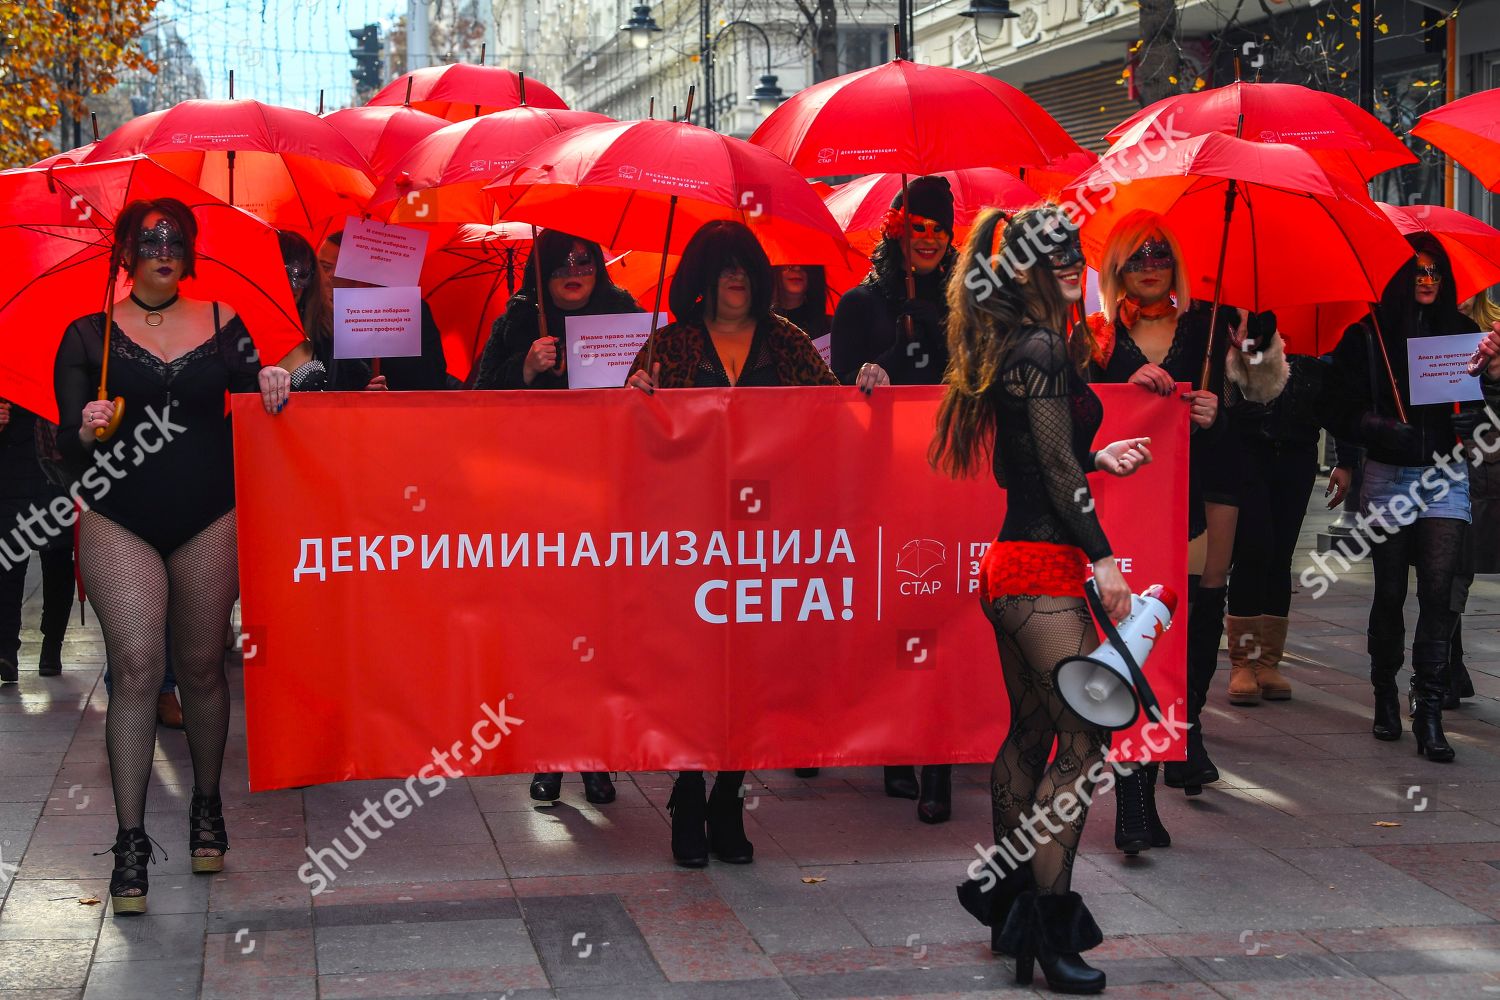 Macedonian Sex Workers Carrying Red Umbrellas Walk